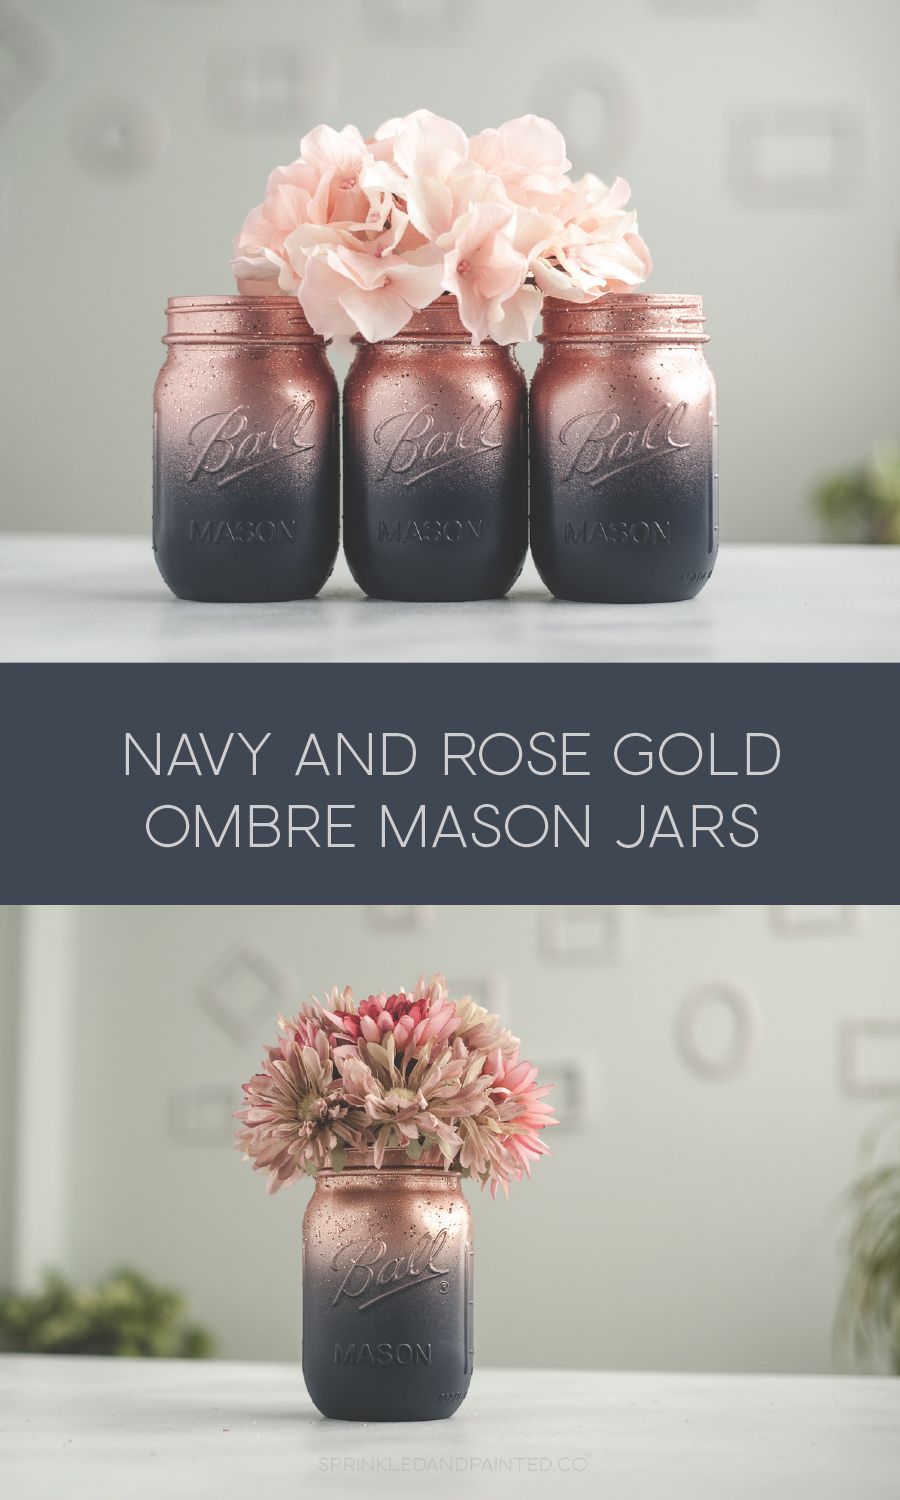 15 wedding Blue mason jars ideas